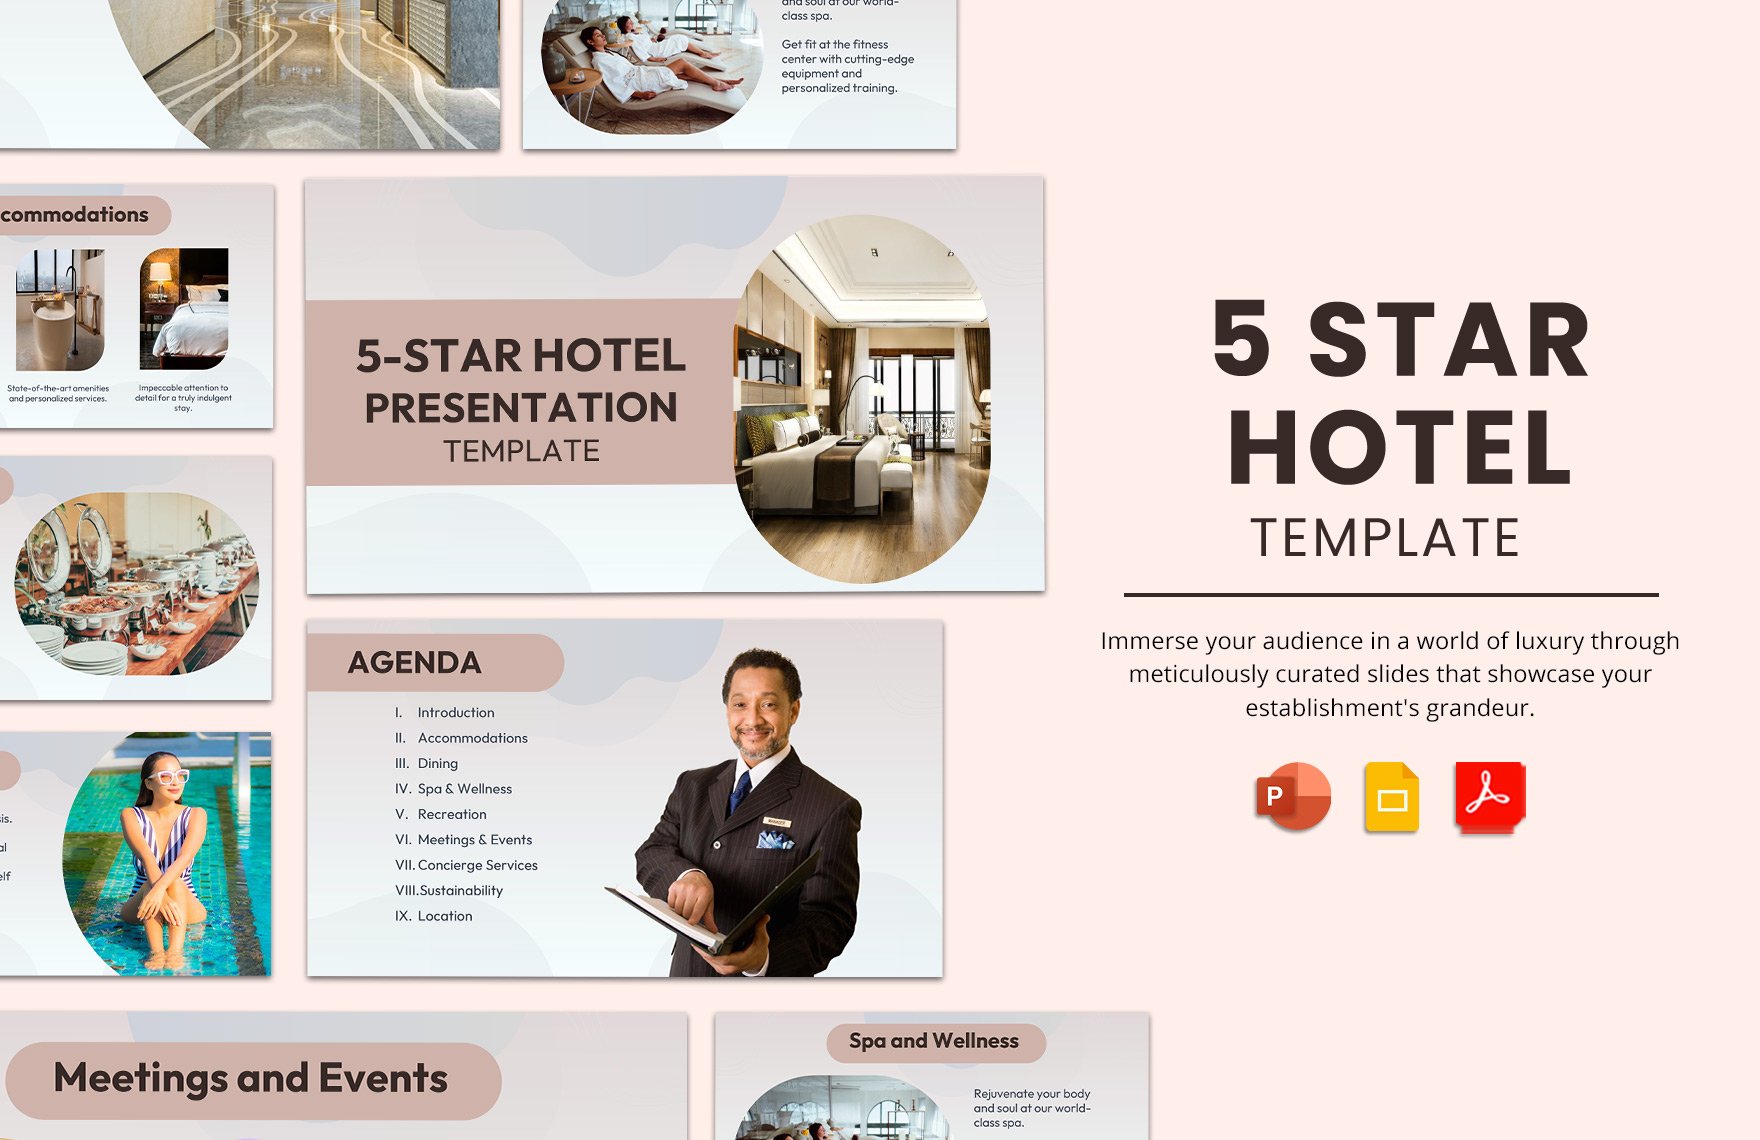 5 Star Hotel Template